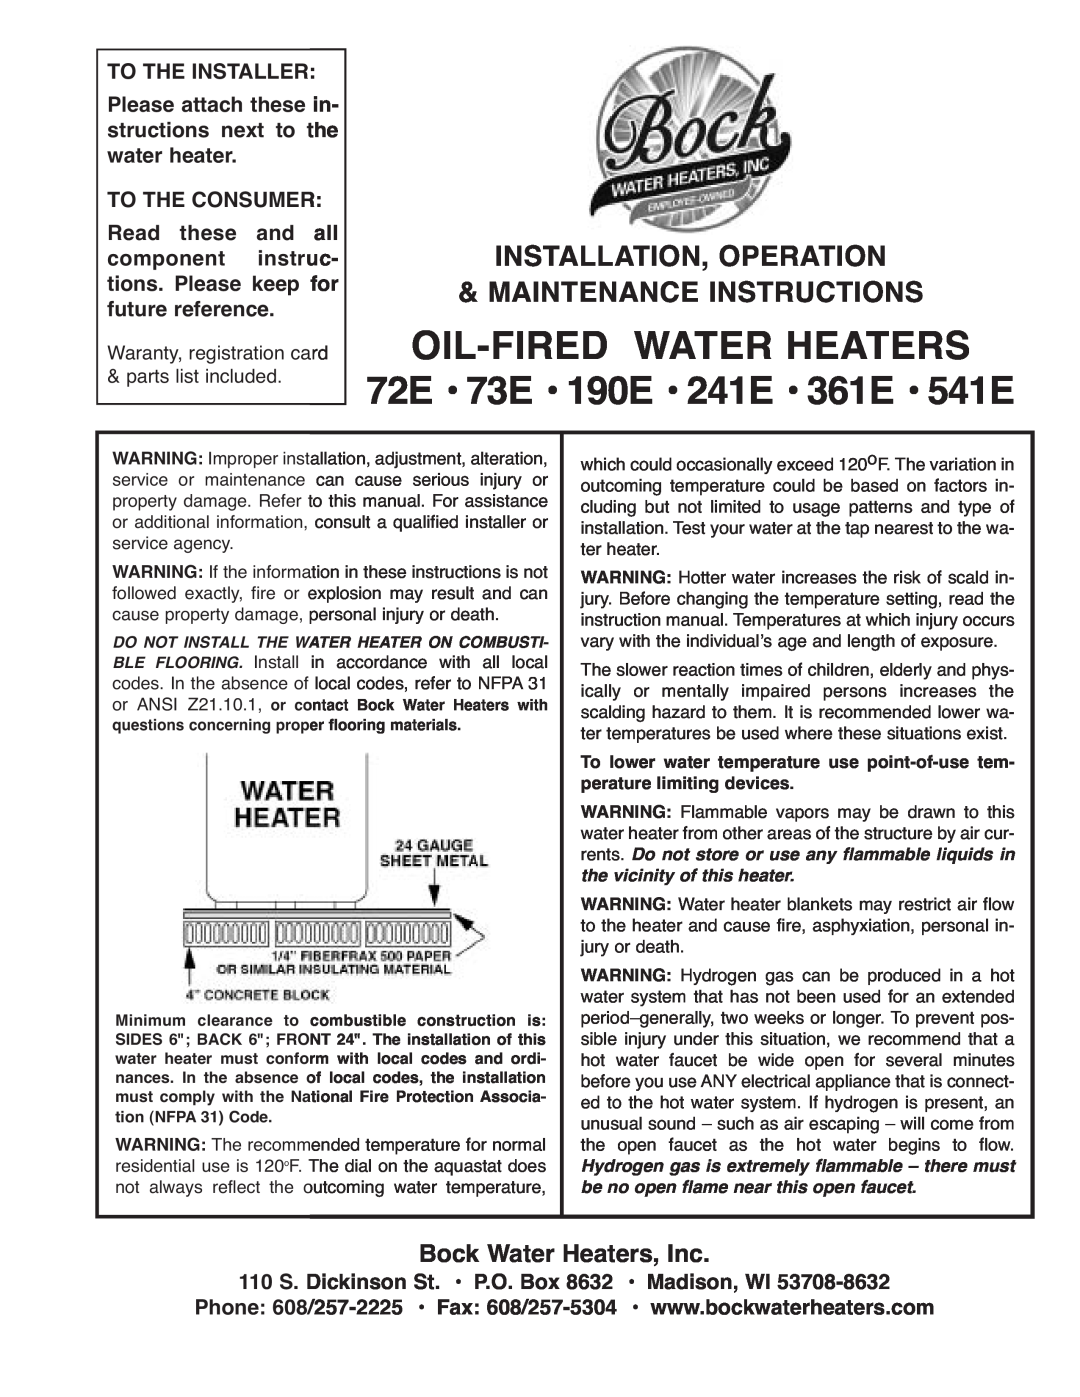 Bock Water heaters instruction manual Bock Water Heaters, Inc, Oil-Fired Water Heaters, 72E 73E 190E 241E 361E 541E 